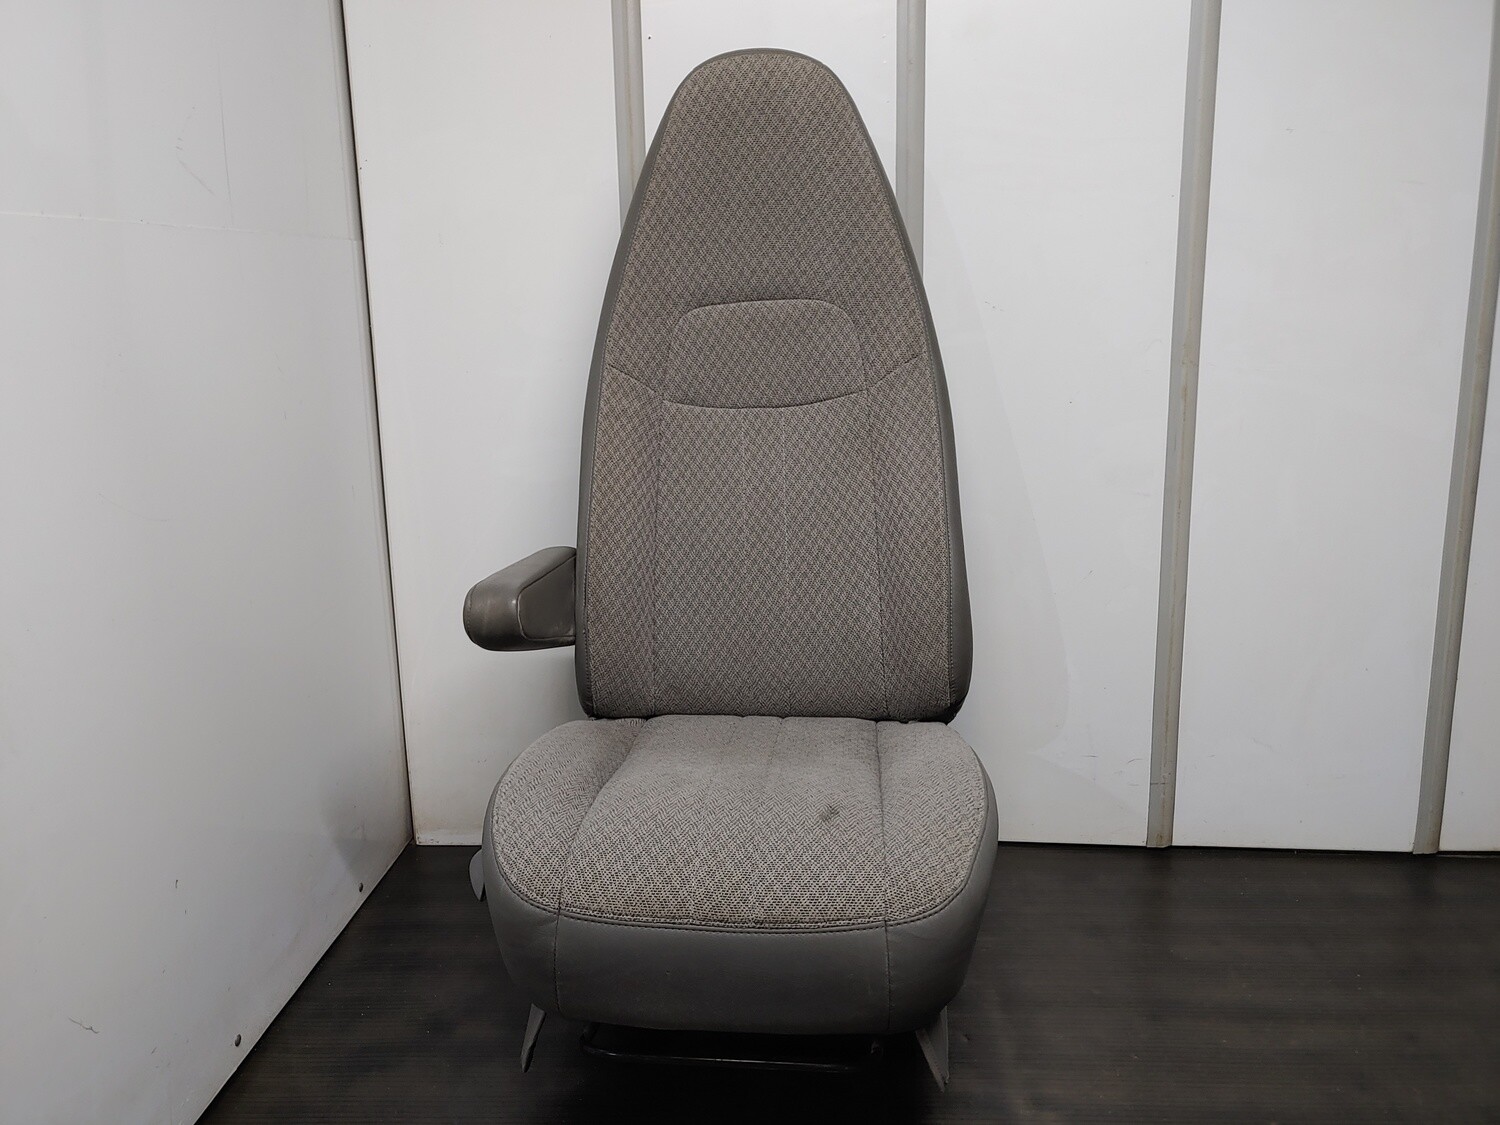 Chevy Express / GMC Savana Driver Seat - Cloth